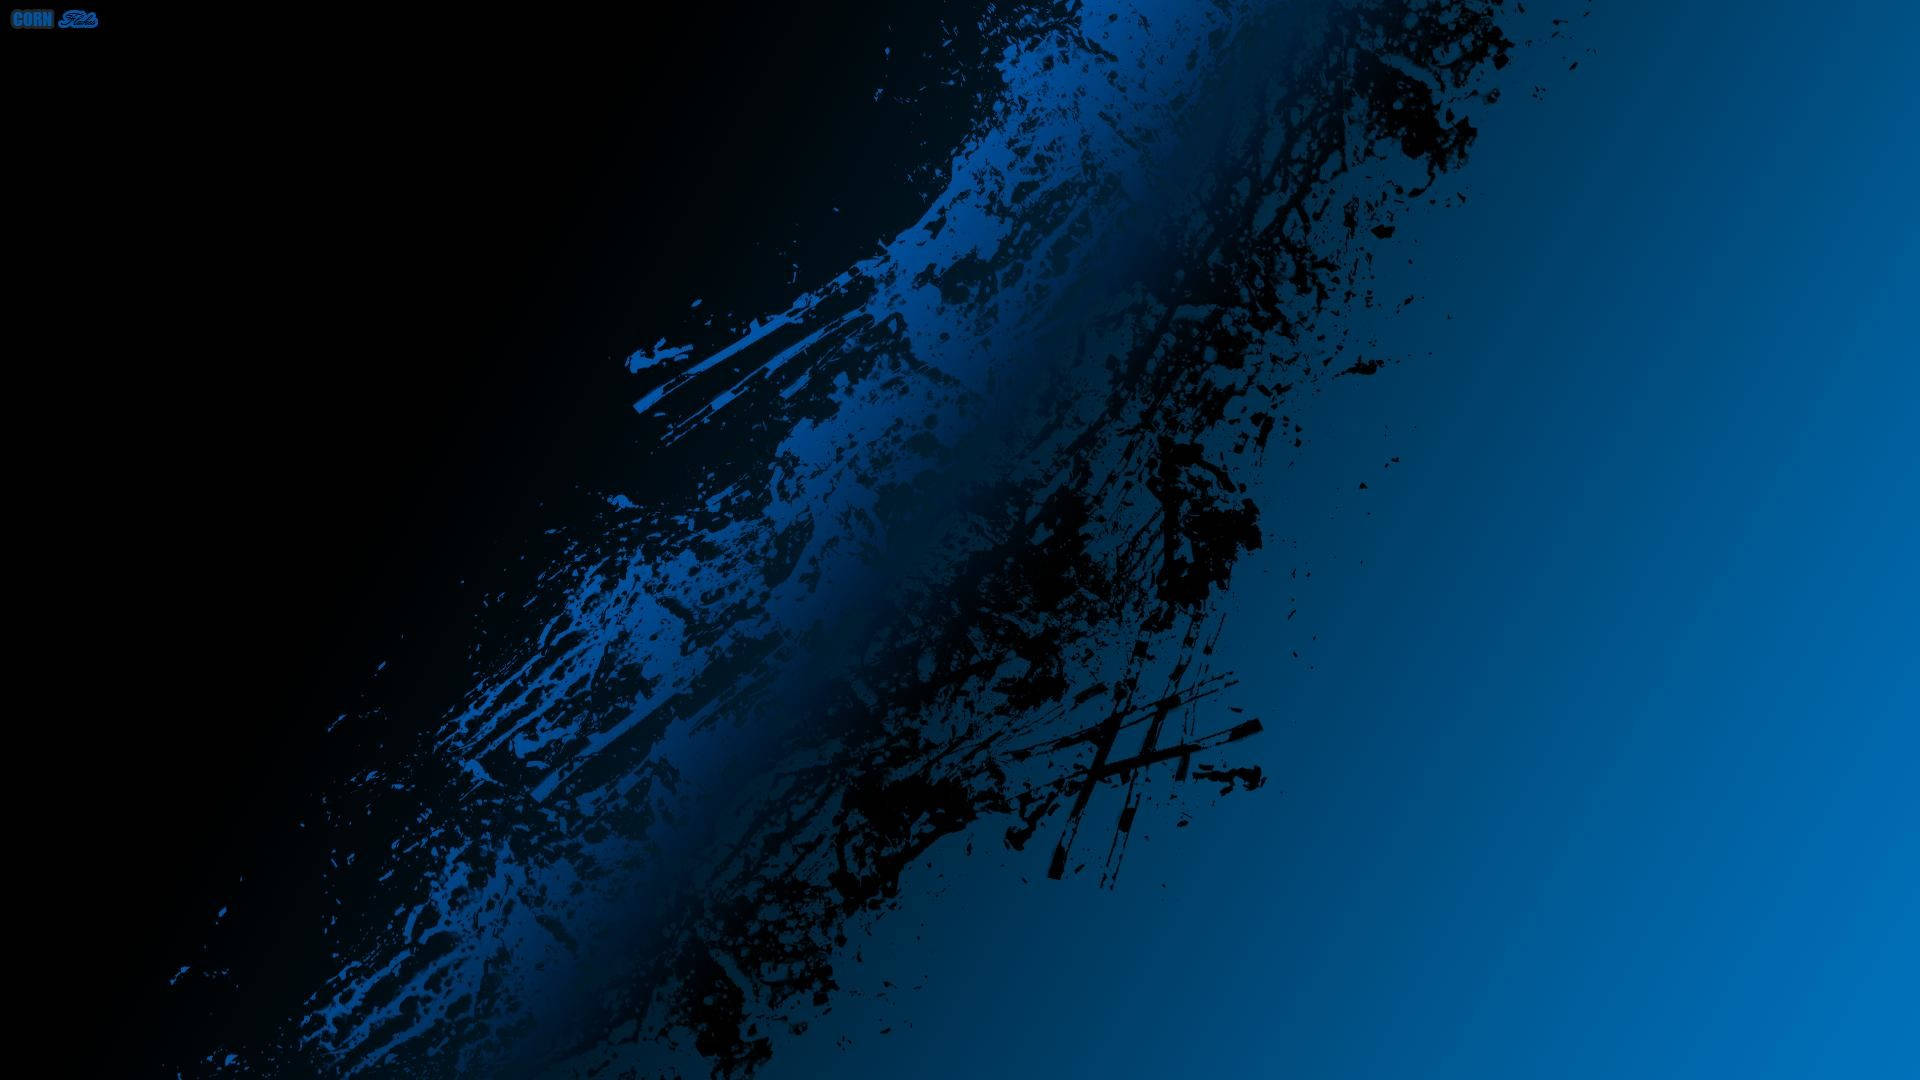 Black And Blue Contrast 1080p Hd Desktop Background